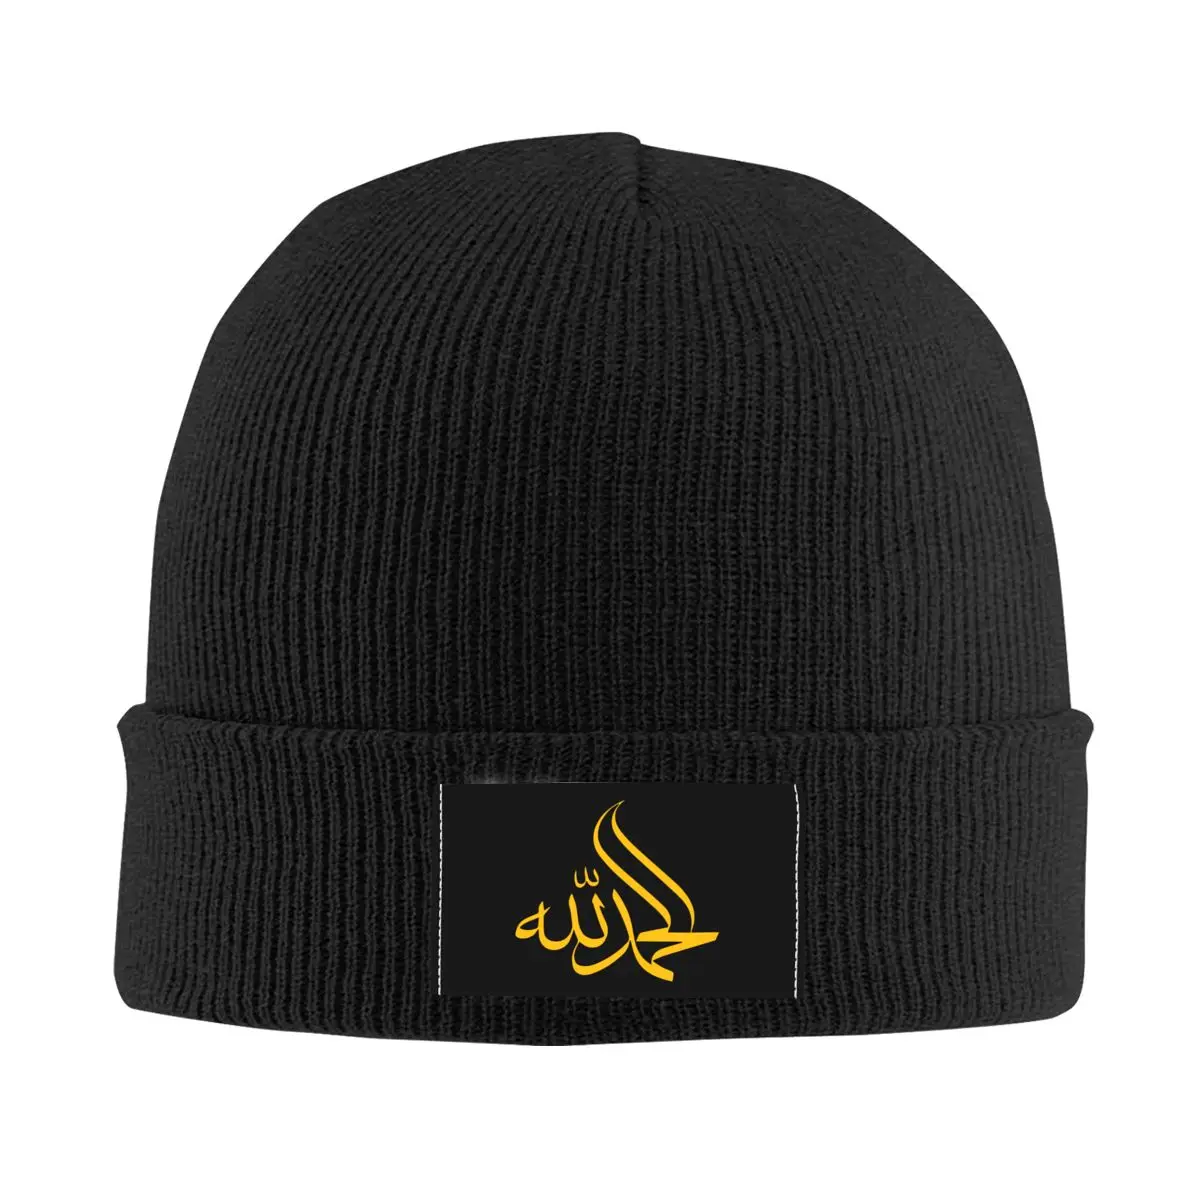 

Alhamdulillah Praise Allah Muslim Islamic Arabic Calligraphy Bonnet Hats Hip Hop Knit Hat Winter Warm Skullies Beanies Caps